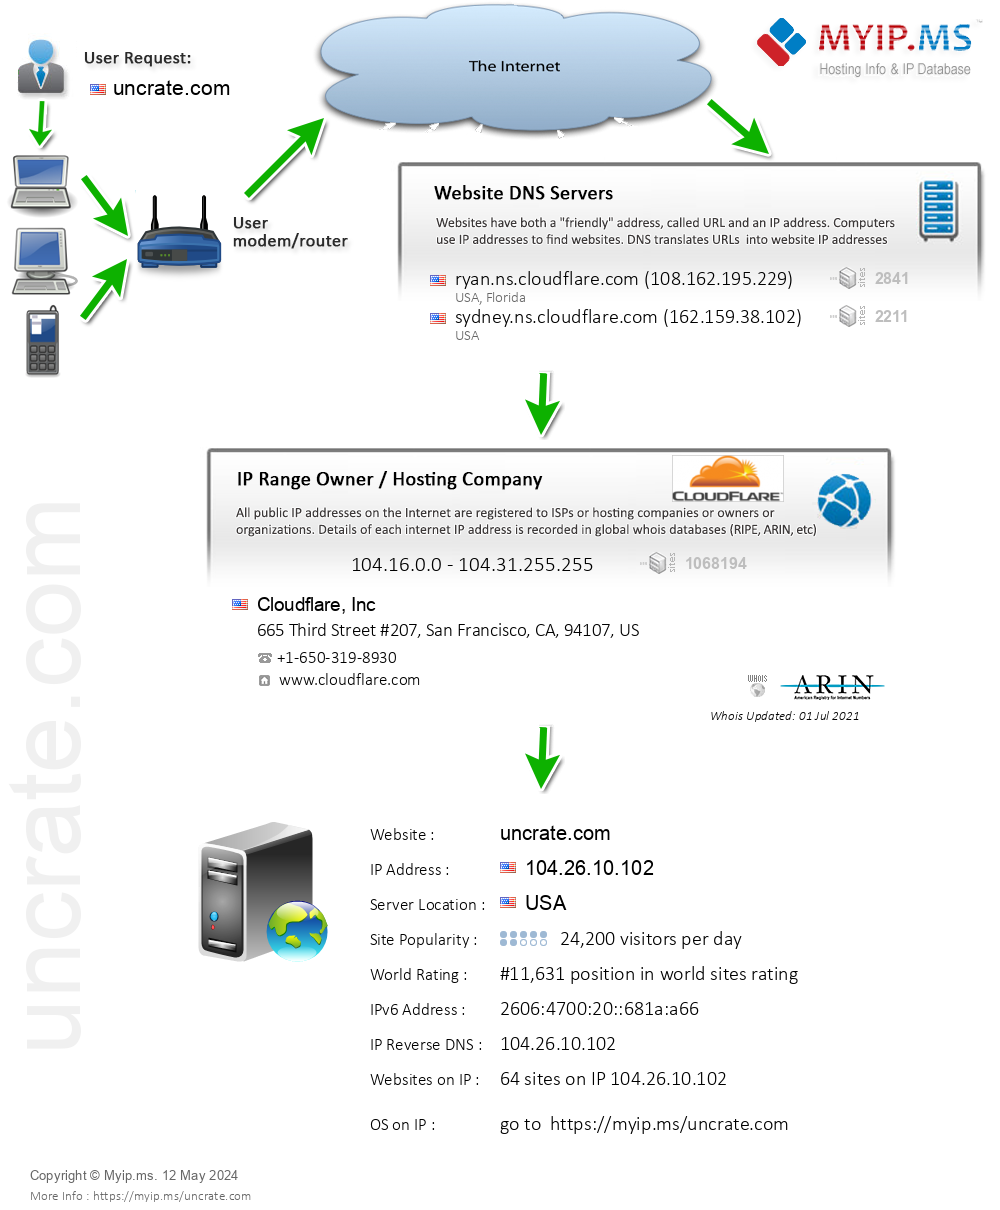 Uncrate.com - Website Hosting Visual IP Diagram